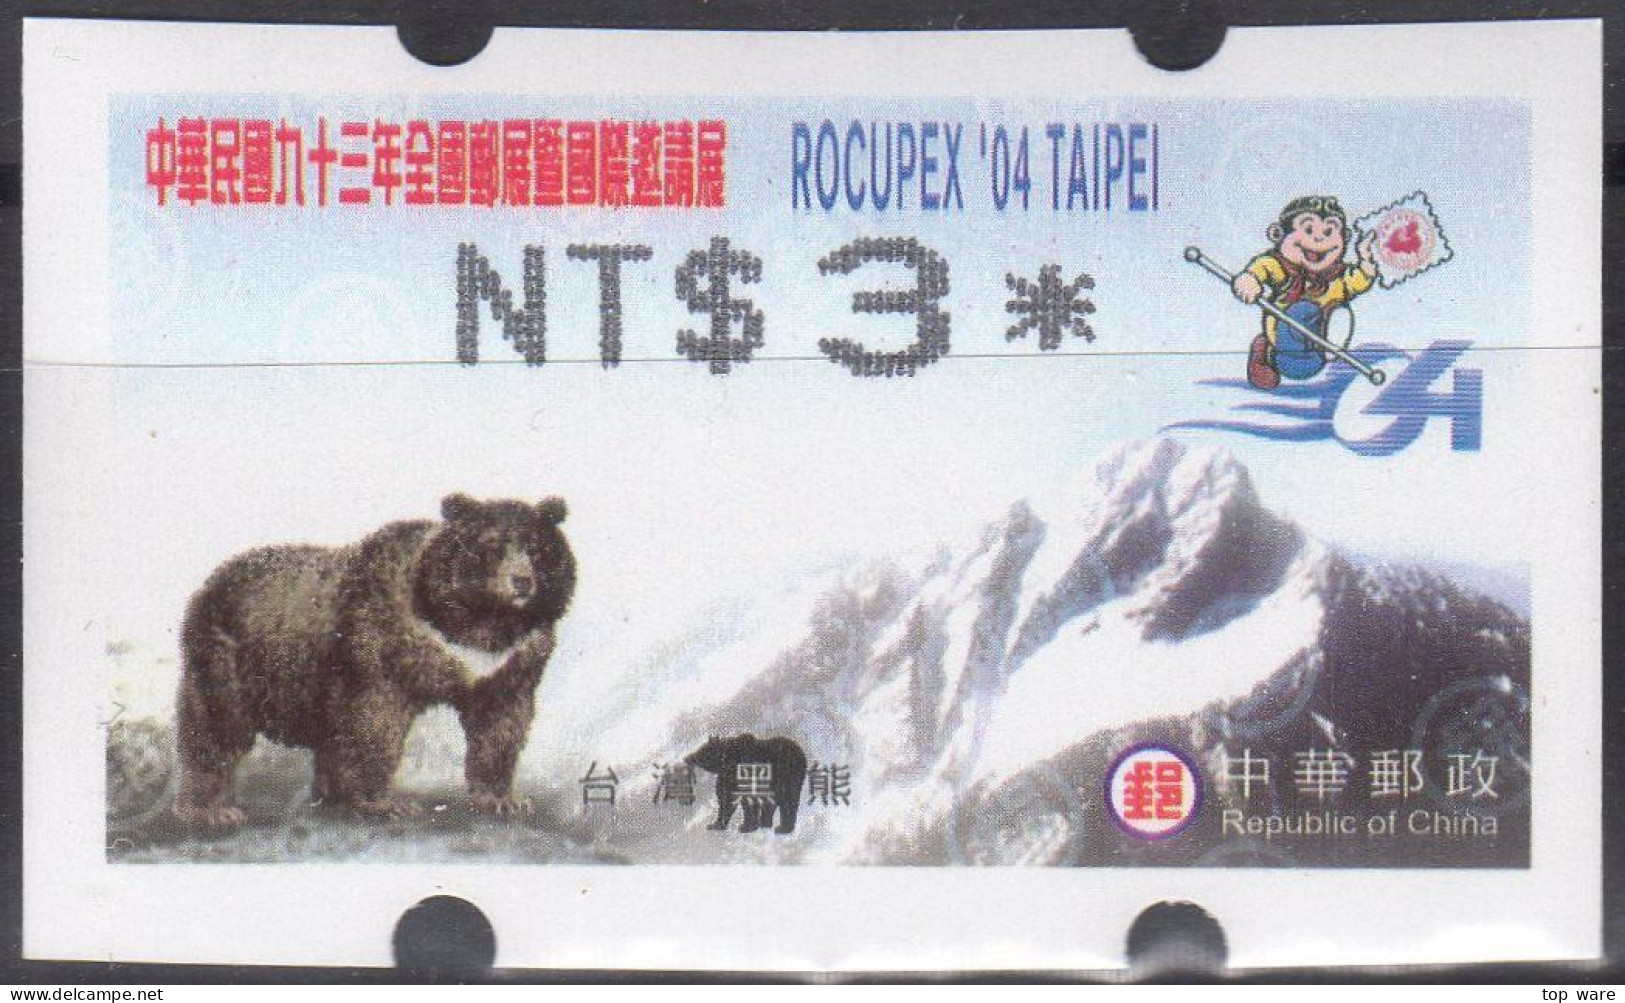 2004 Automatenmarken China Taiwan ROCUPEX 04 TAIPEI Bear MiNr.6.2 Black ATM NT$3 MNH Variosyst Kiosk Etiquetas - Automaten